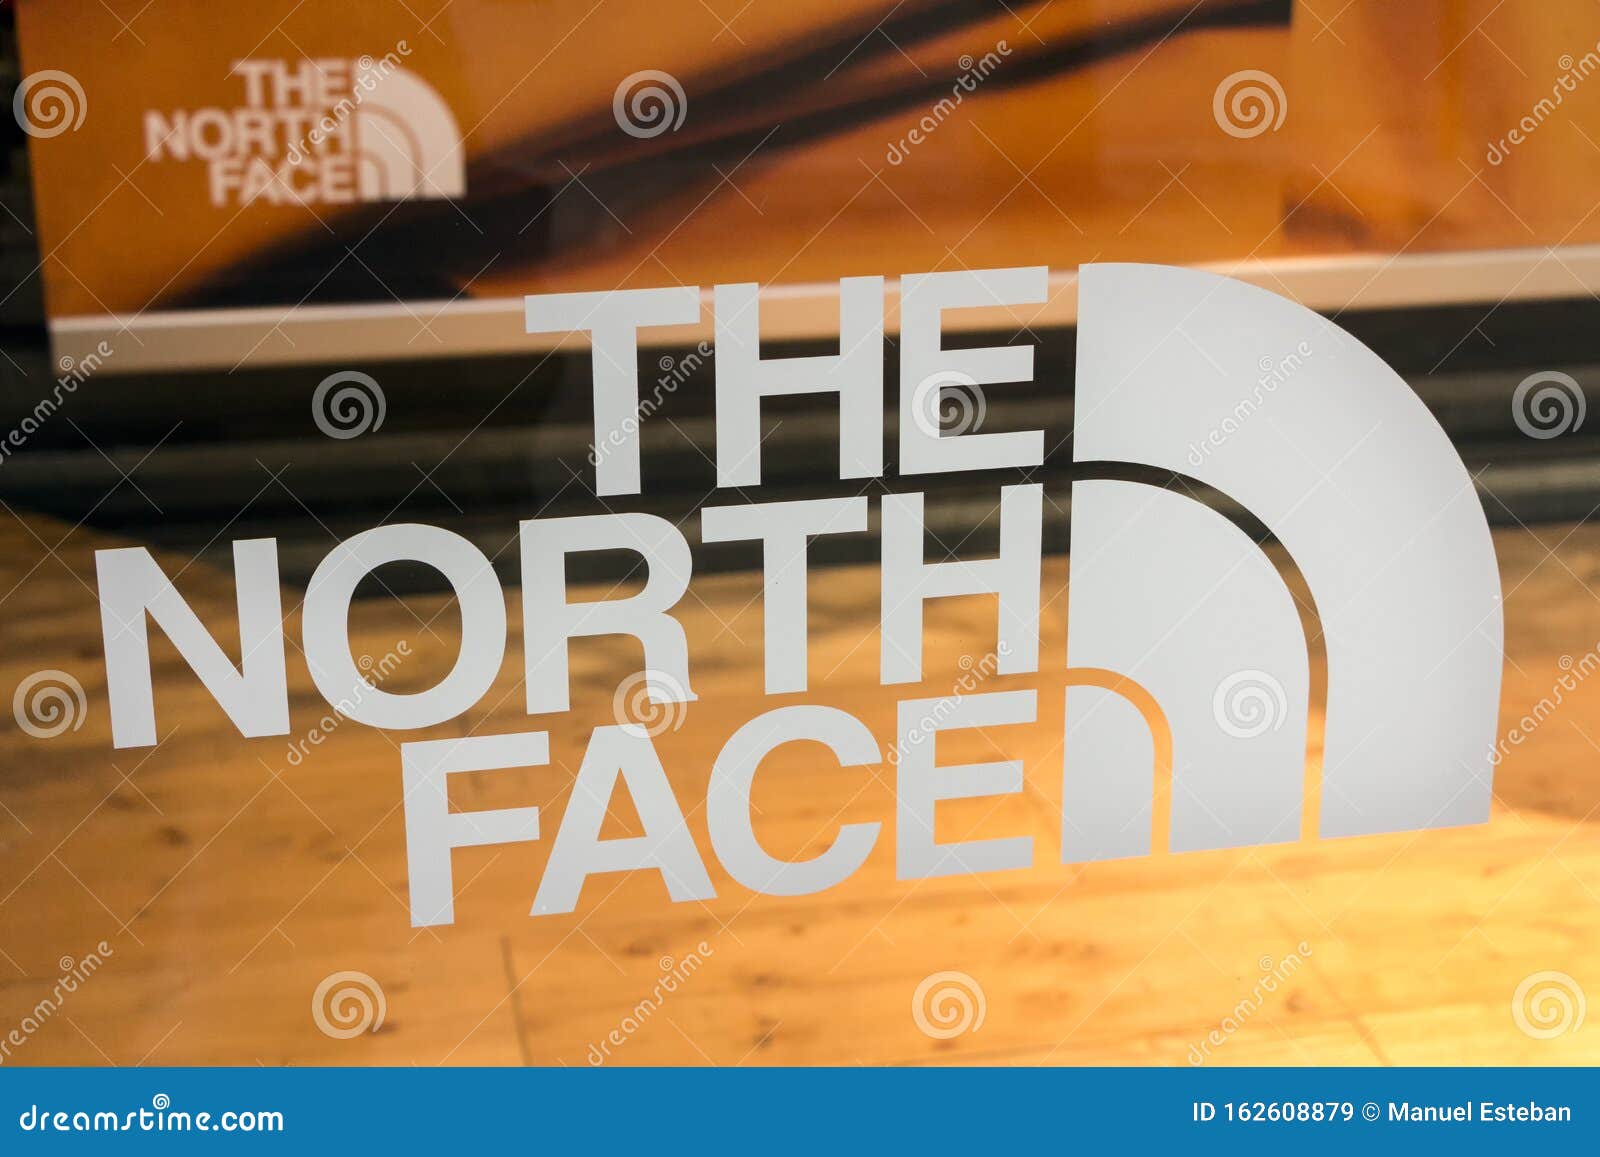 the north face company